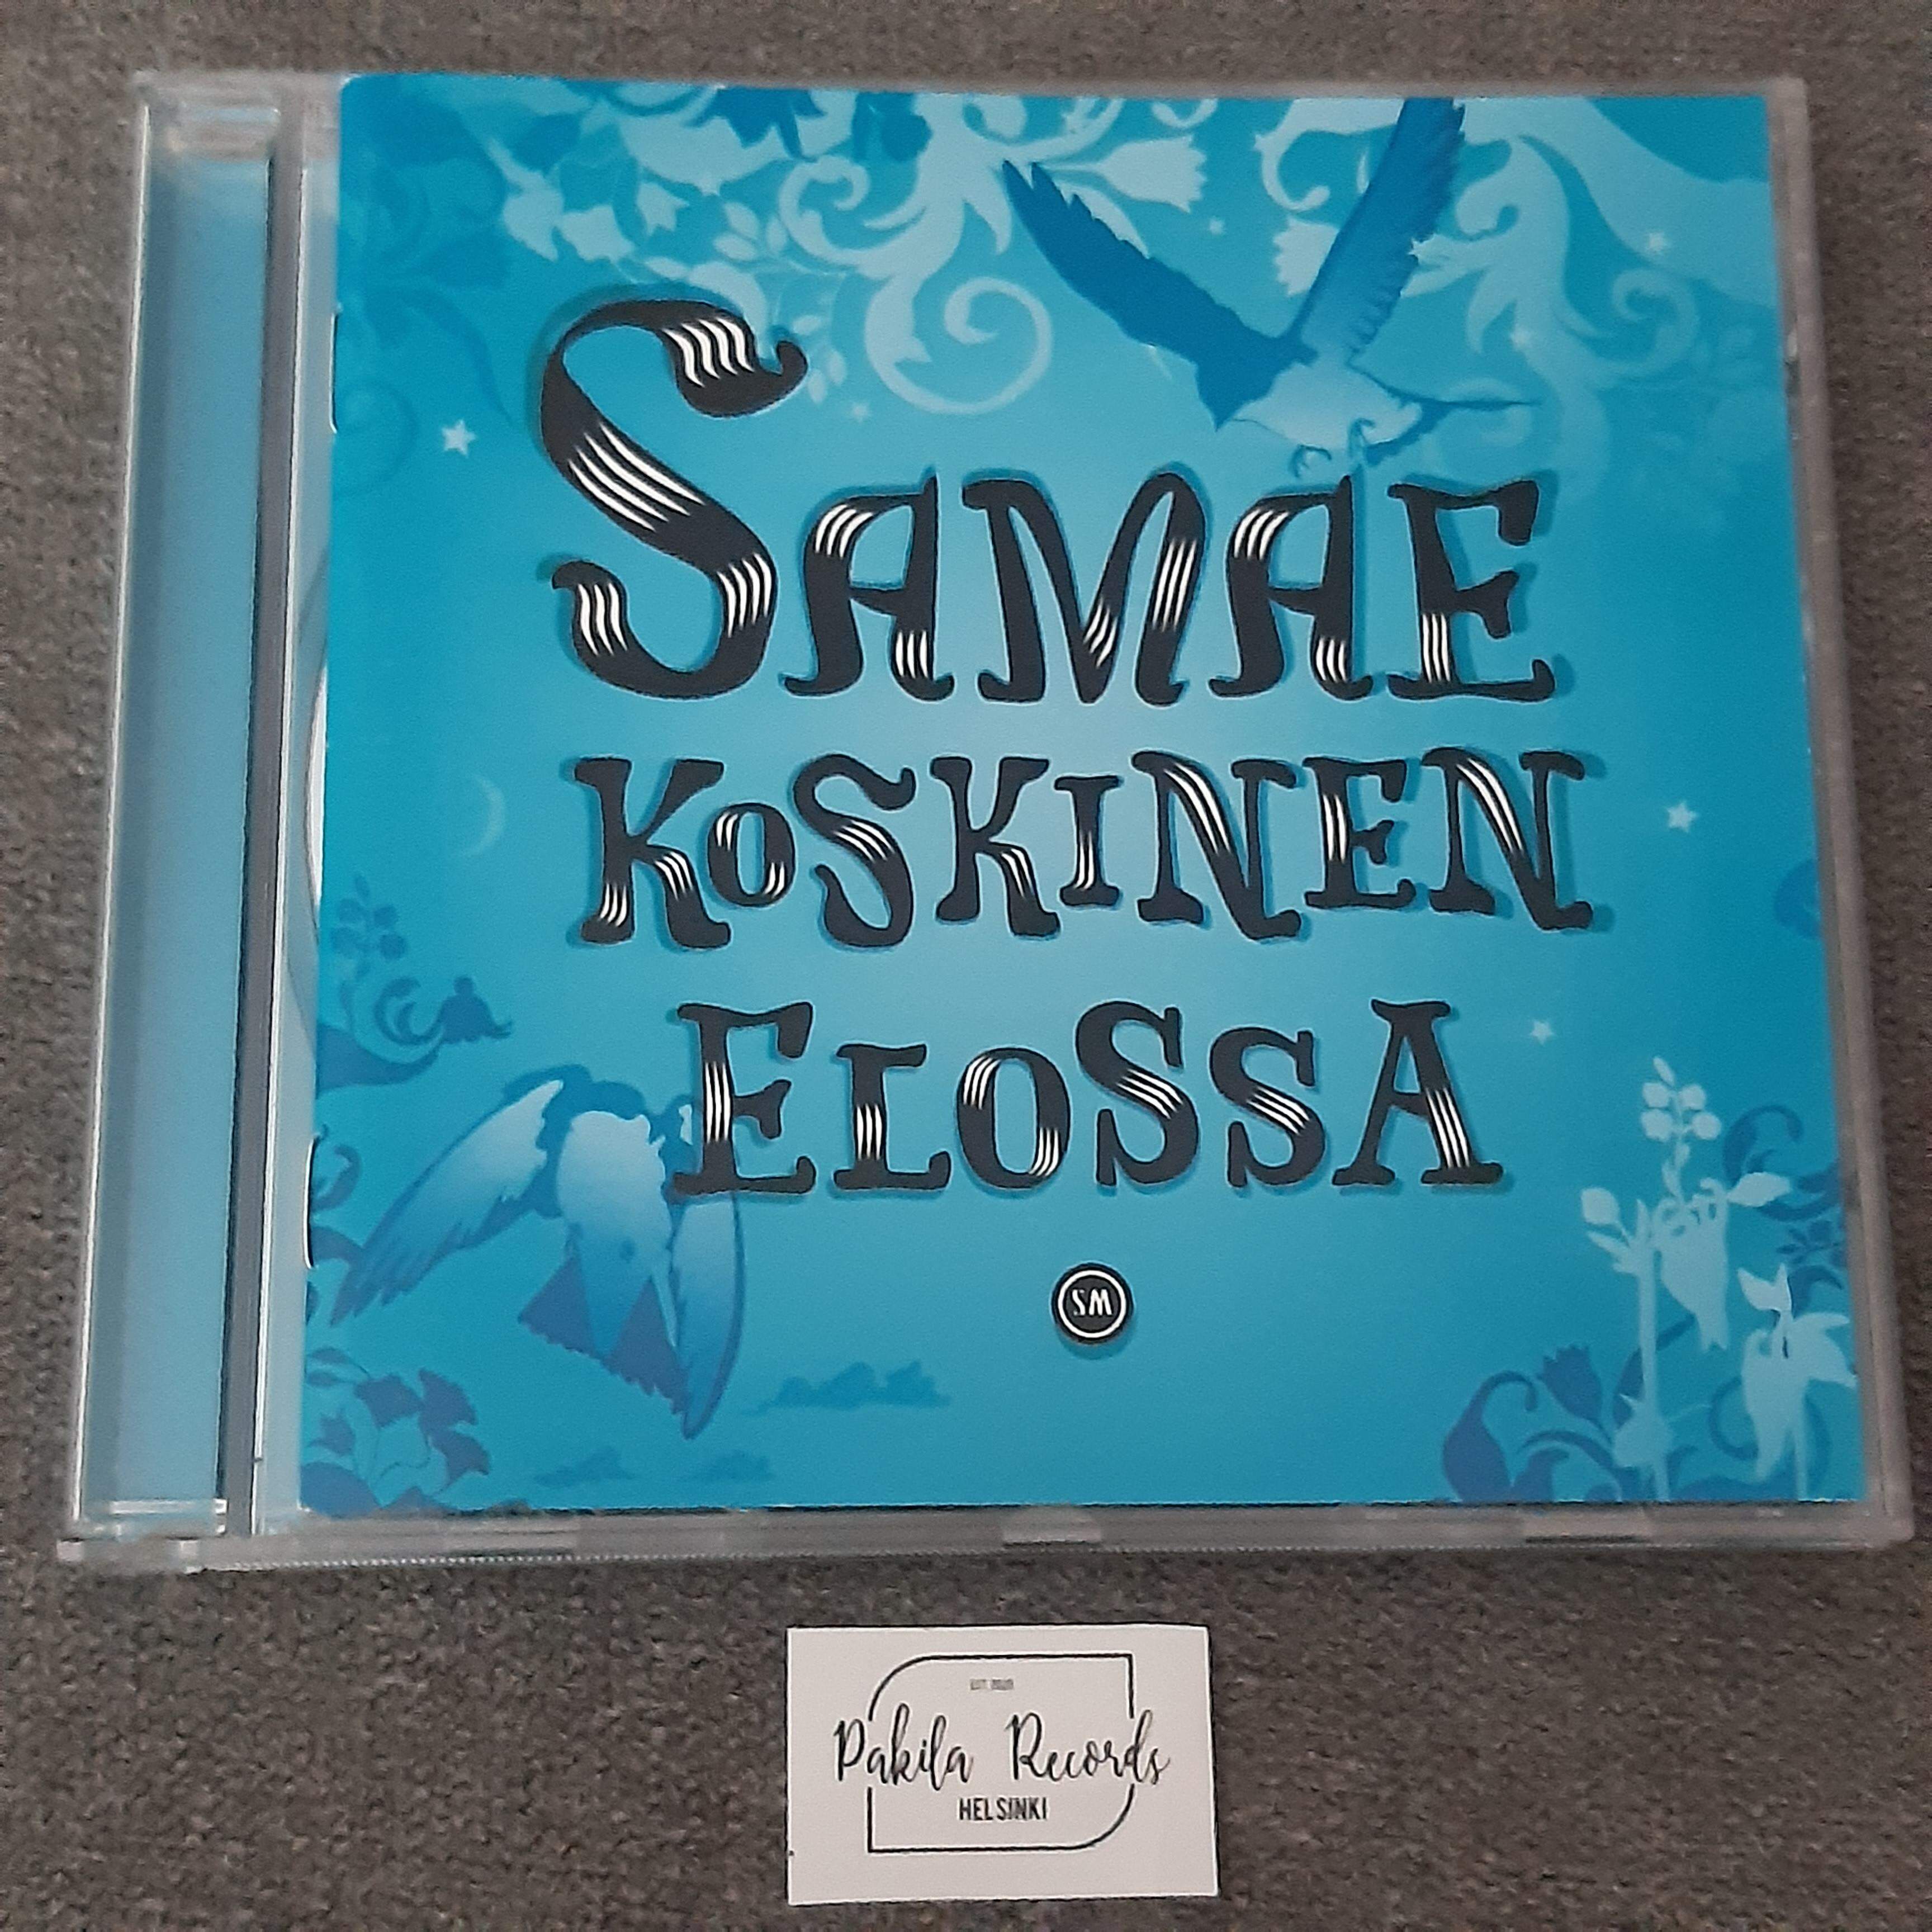 Samae Koskinen - Elossa - CD (käytetty)